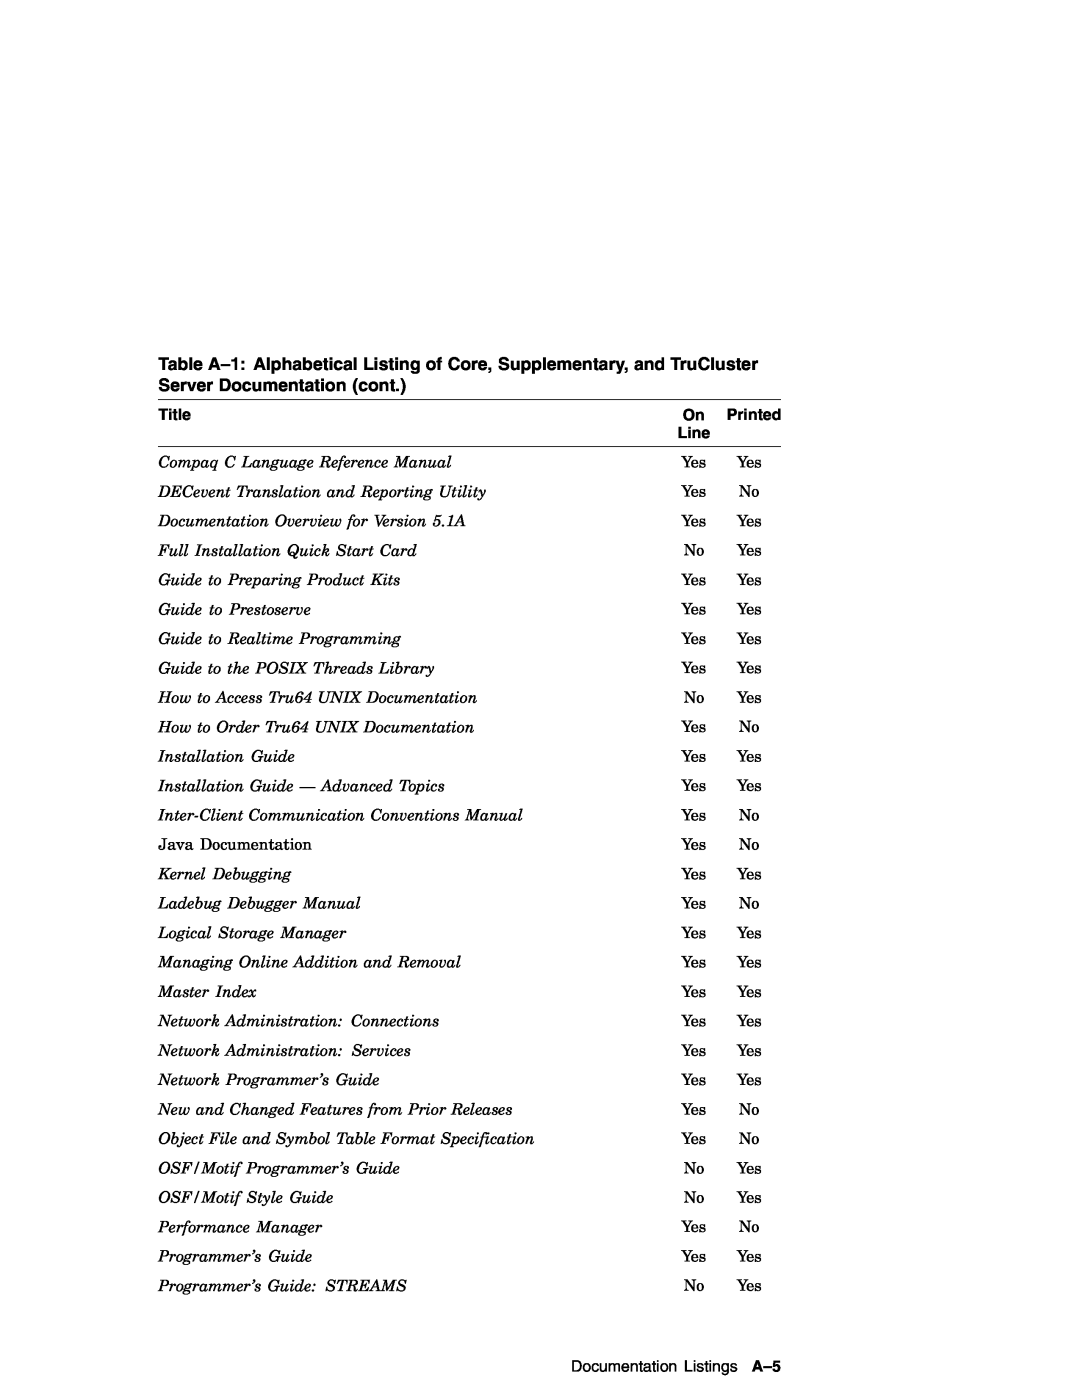 Compaq AA-RH8RD-TE manual Title, Printed, Line, Documentation Listings A-5 